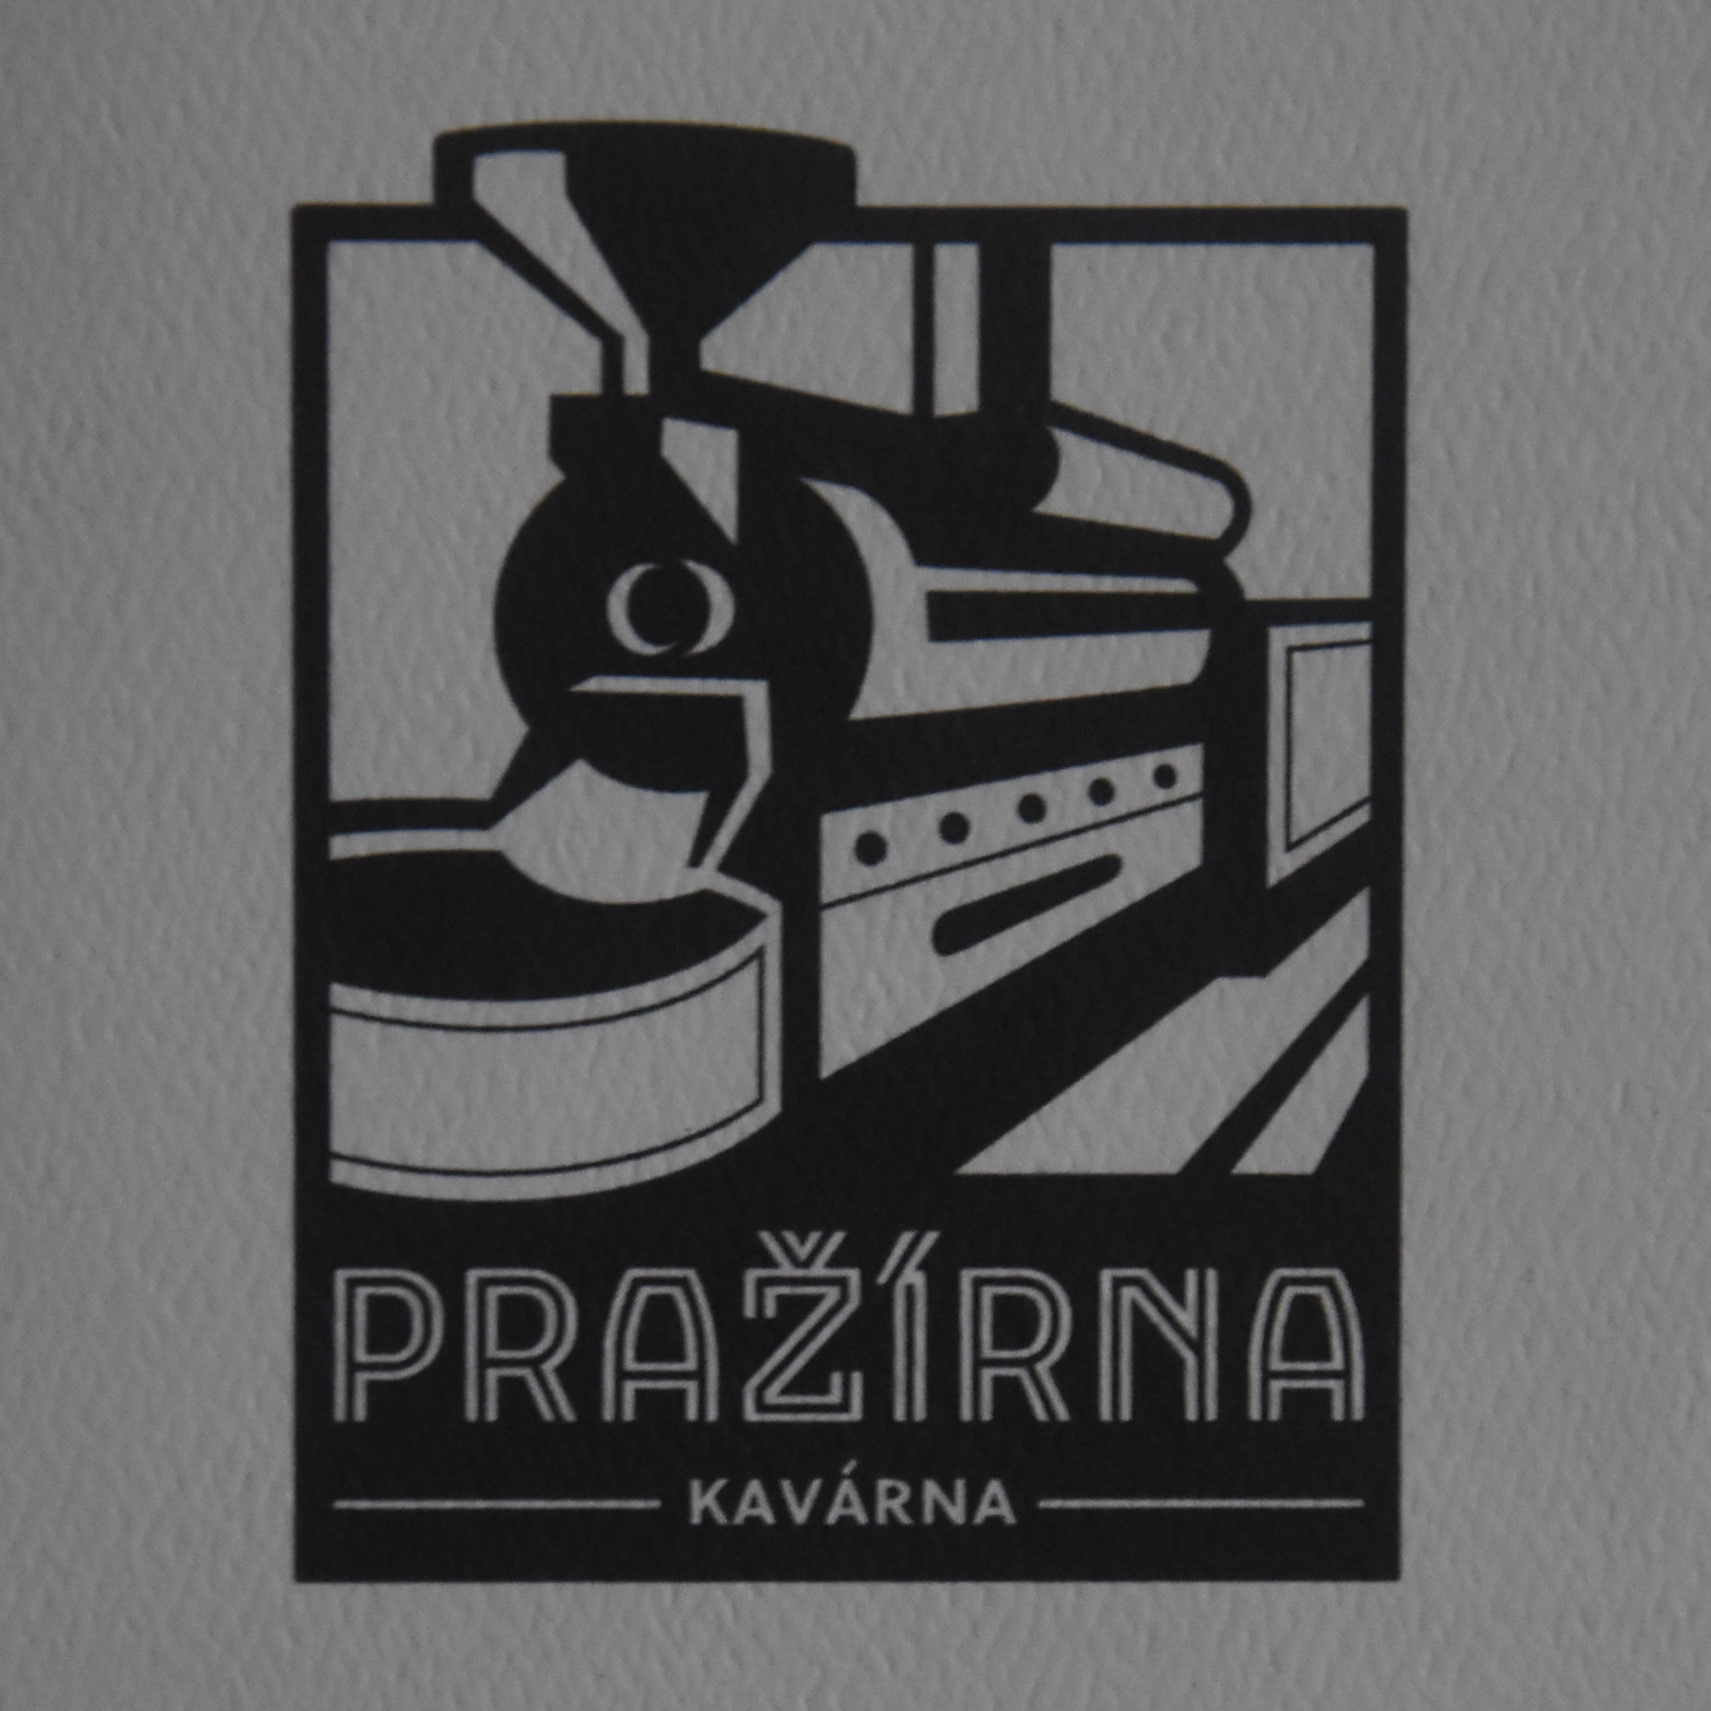 The Pražírna Kavárna logo, a black and white line drawing of a roaster. Am I the only one who thinks it looks like a steam train?